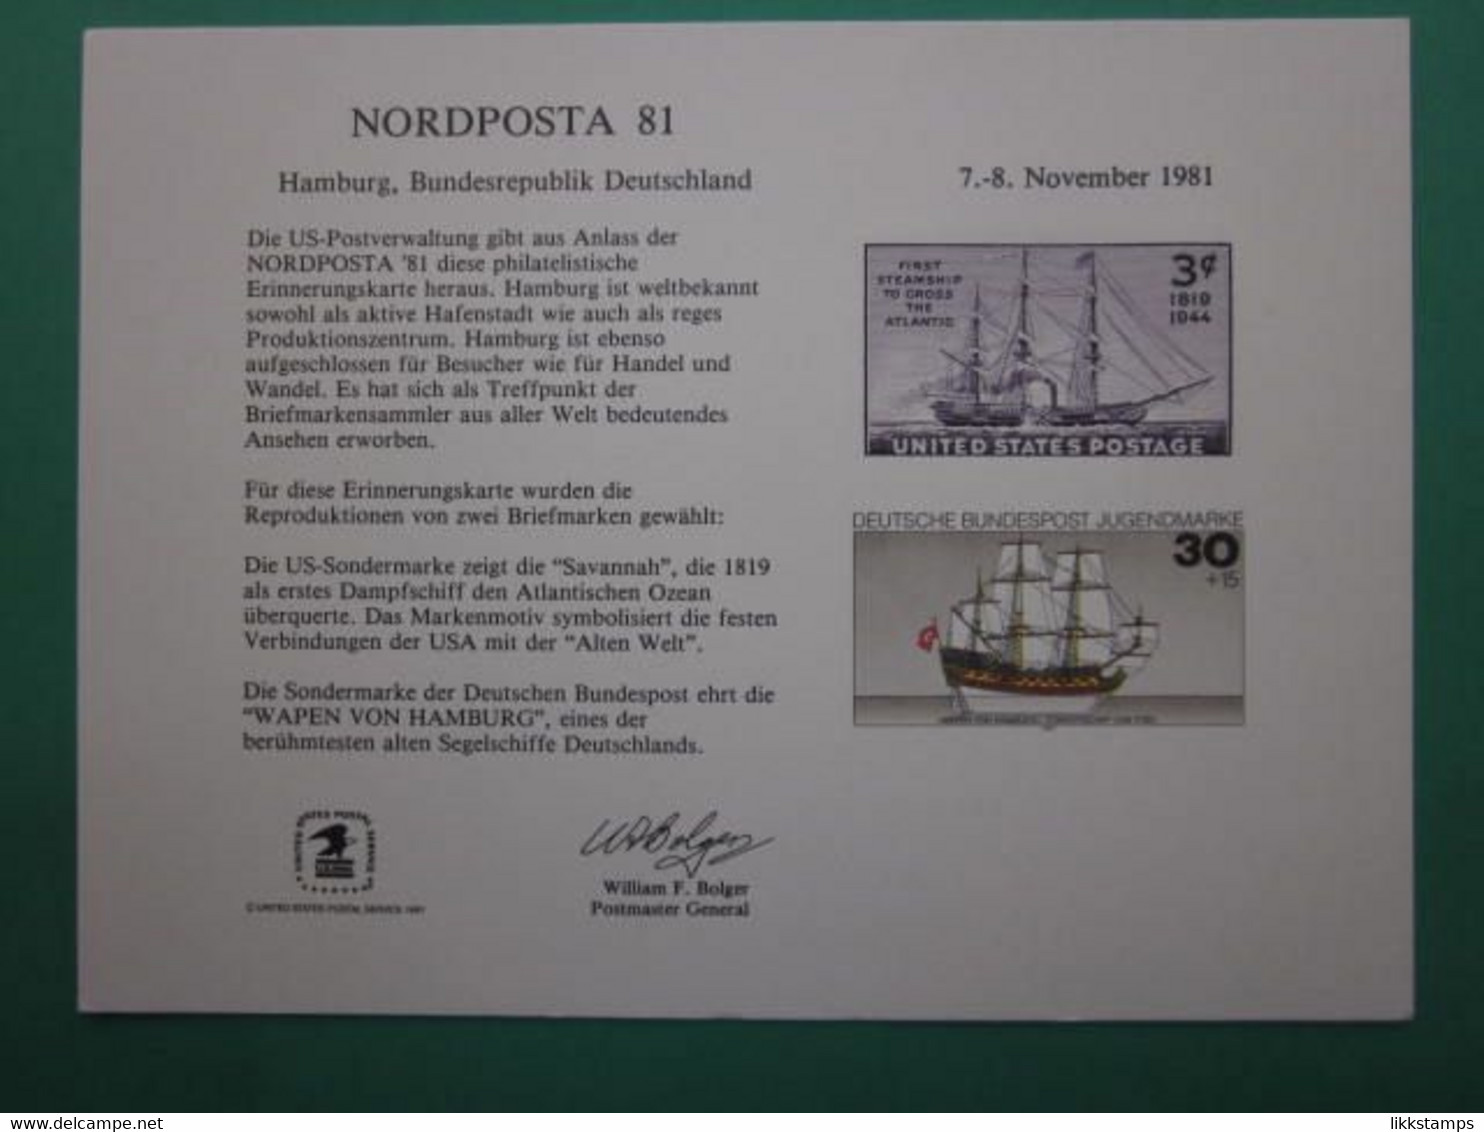 1981 A SOUVENIR CARD FOR NORDPOSTA 81, HAMBURG, GERMANY. ( 02188 ) - Souvenirkarten